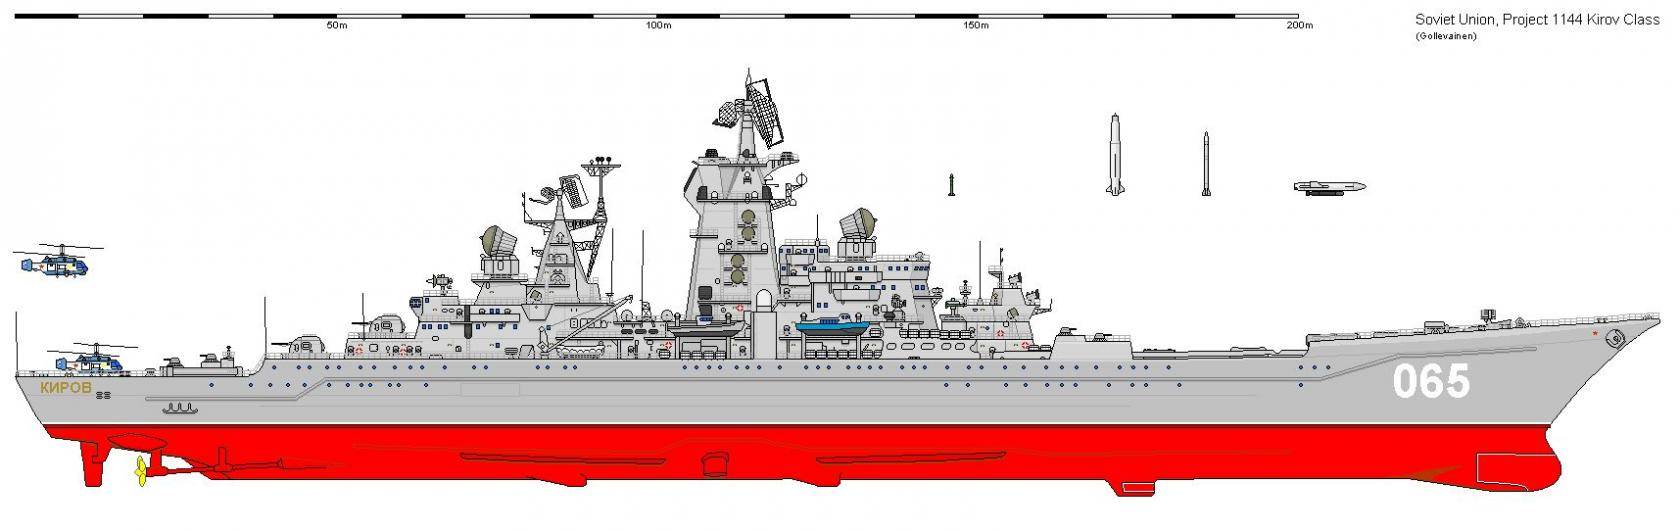 Обзор и анализ характеристик кораблей проекта 1144